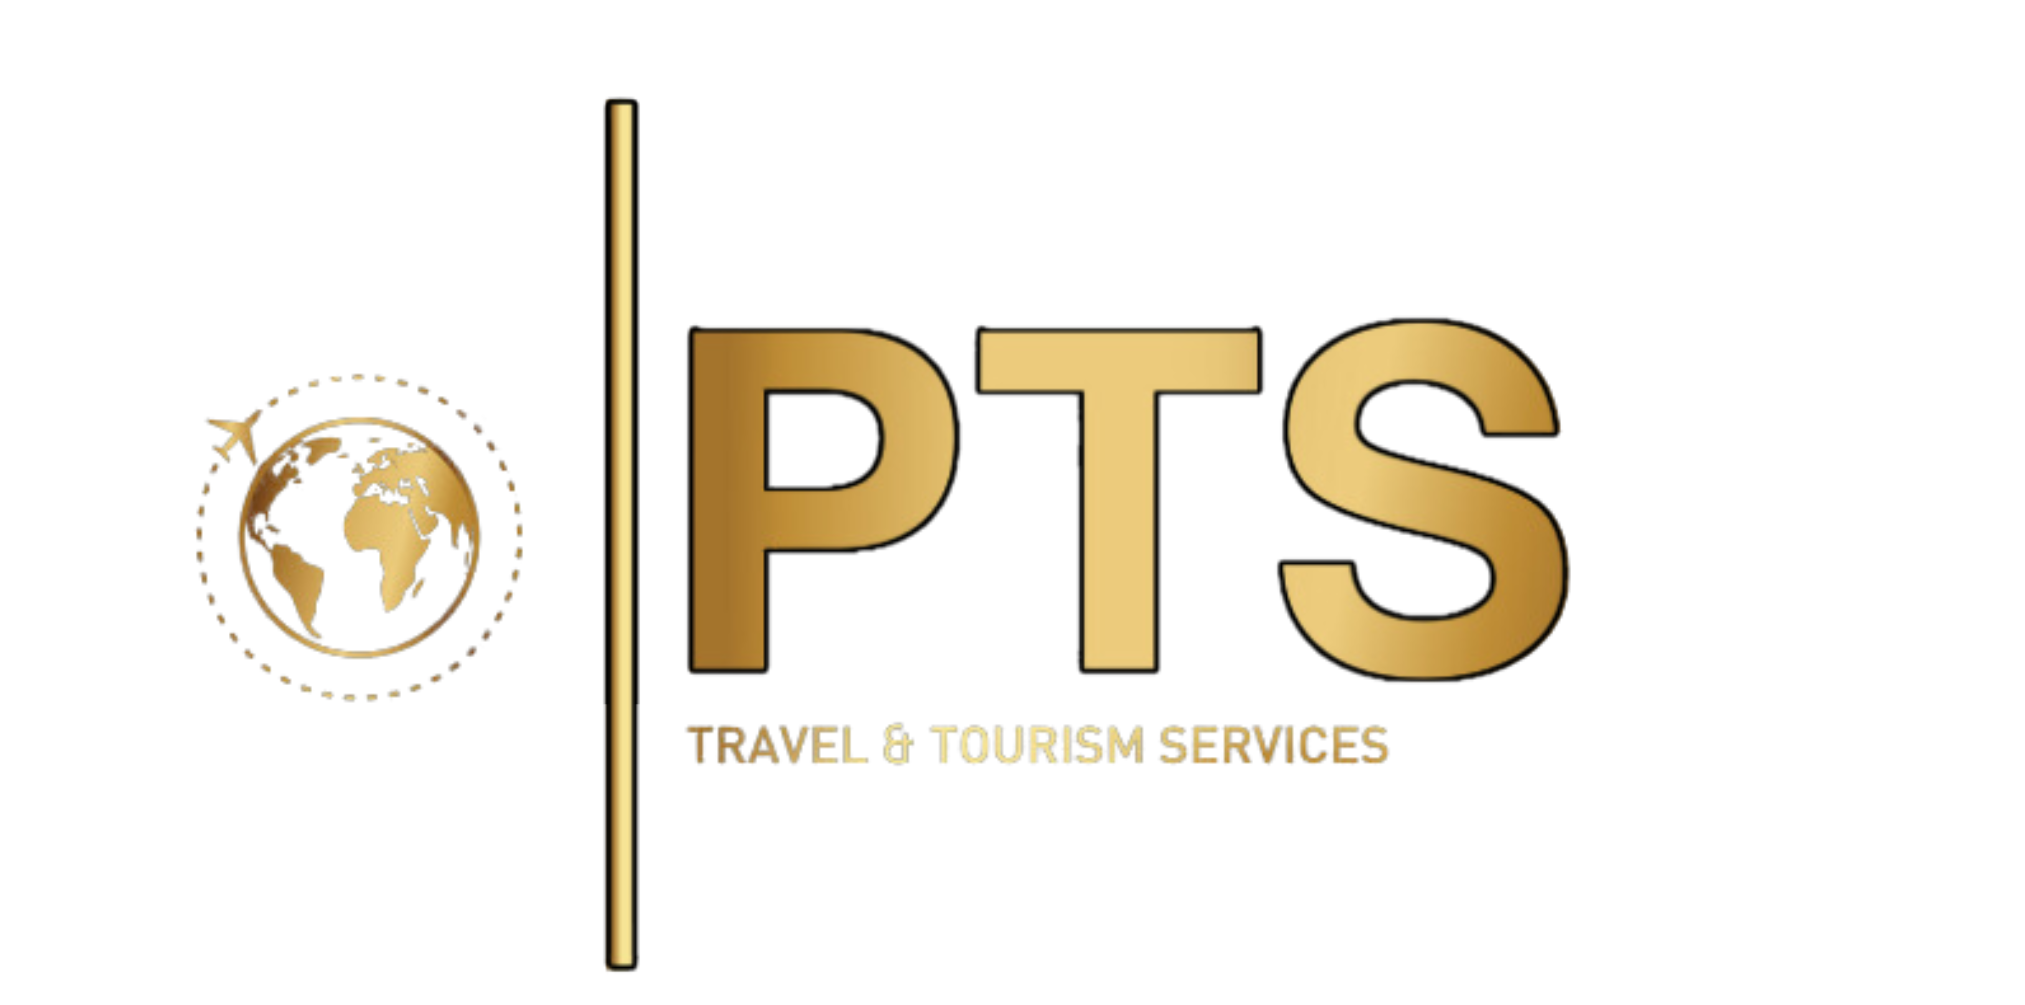 PTS Travel & Tourism Services